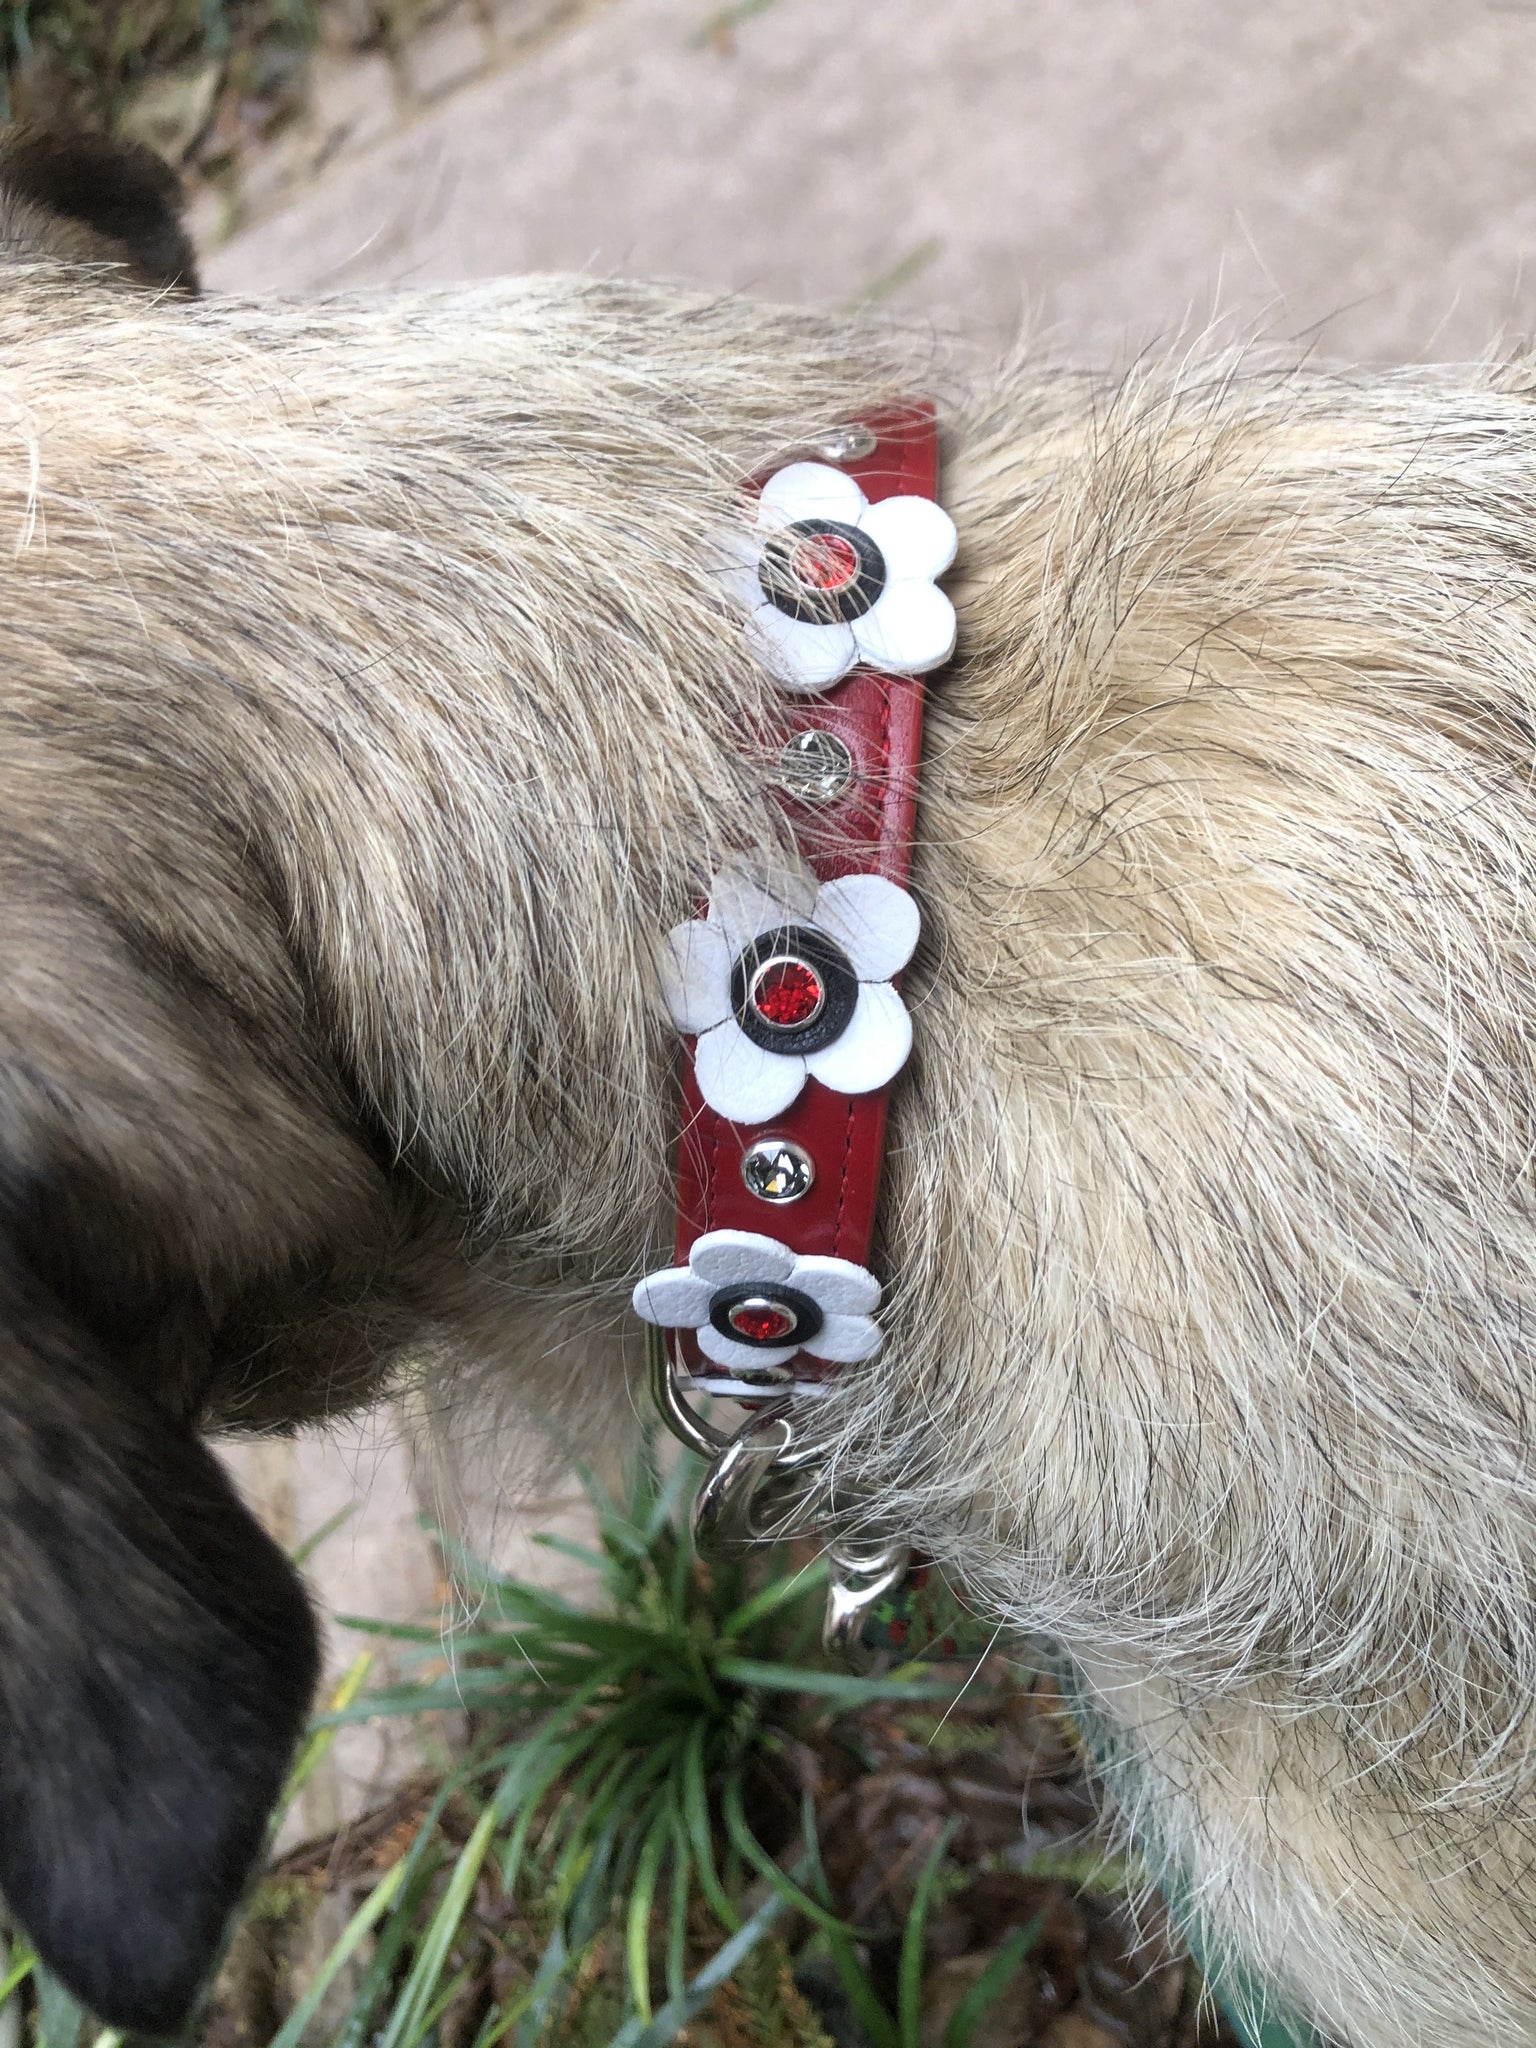 Malka Crystal Leather Dog Collar